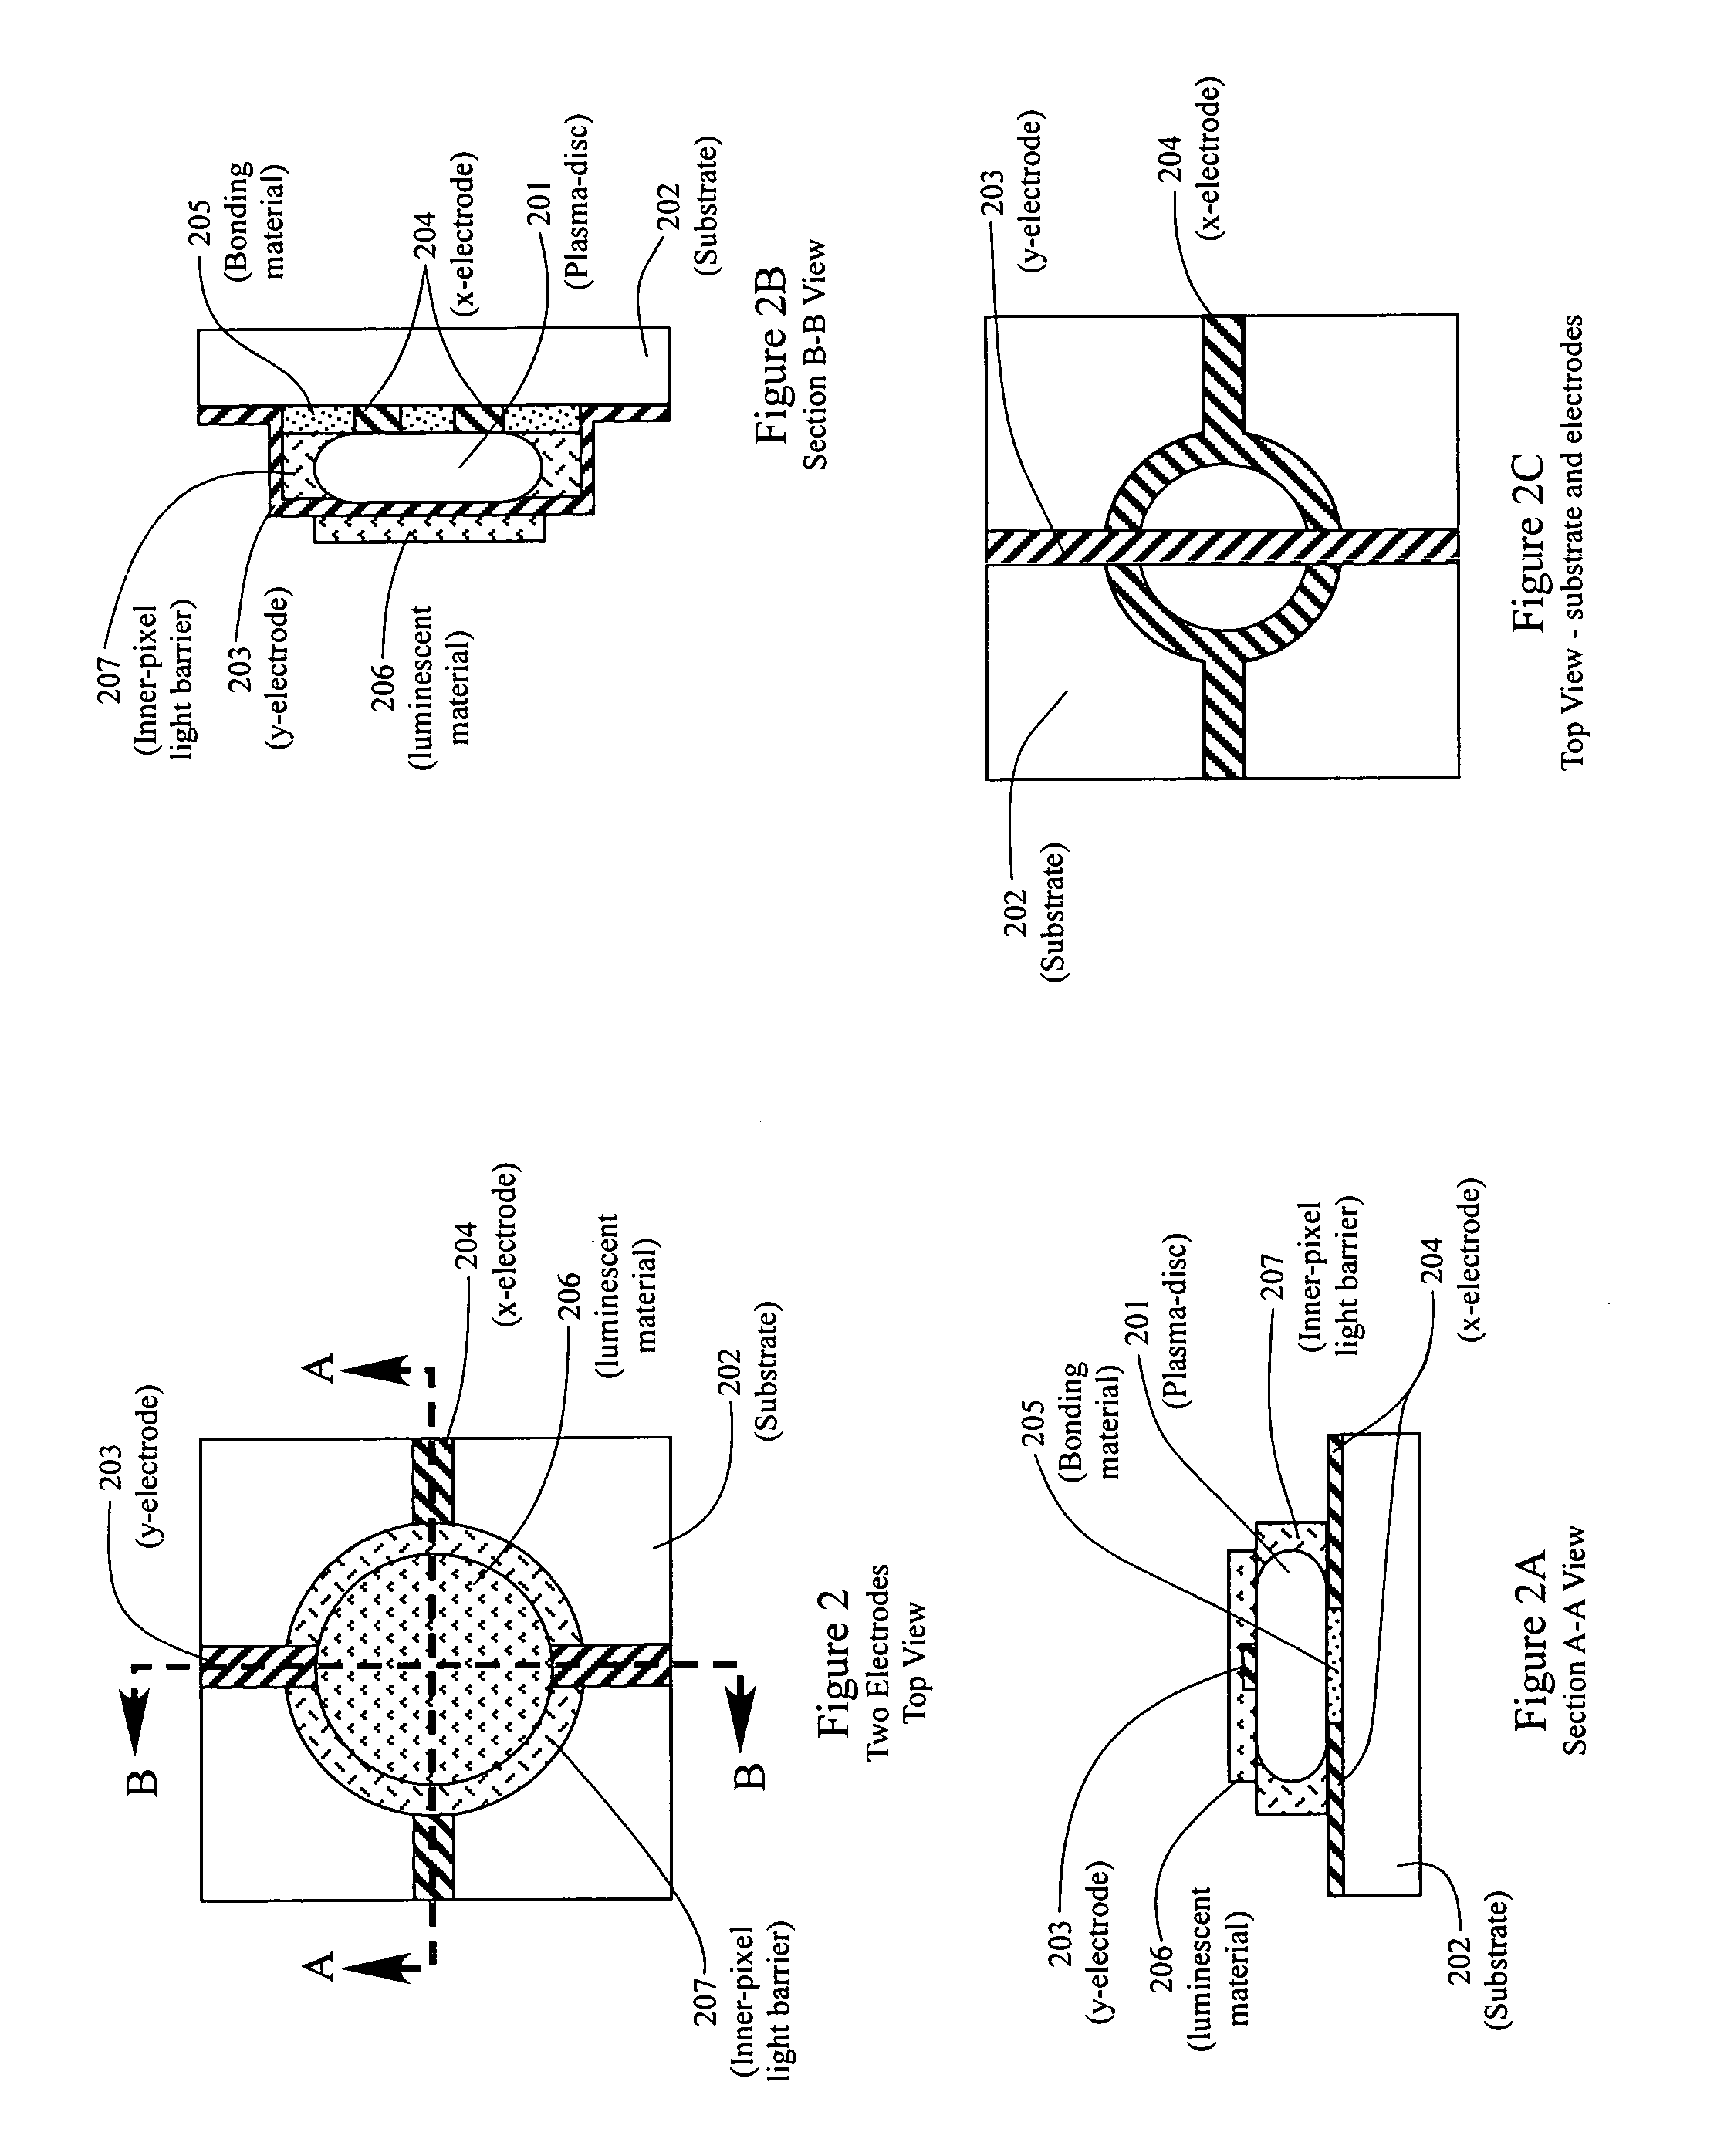 Plasma-disc article of manufacture